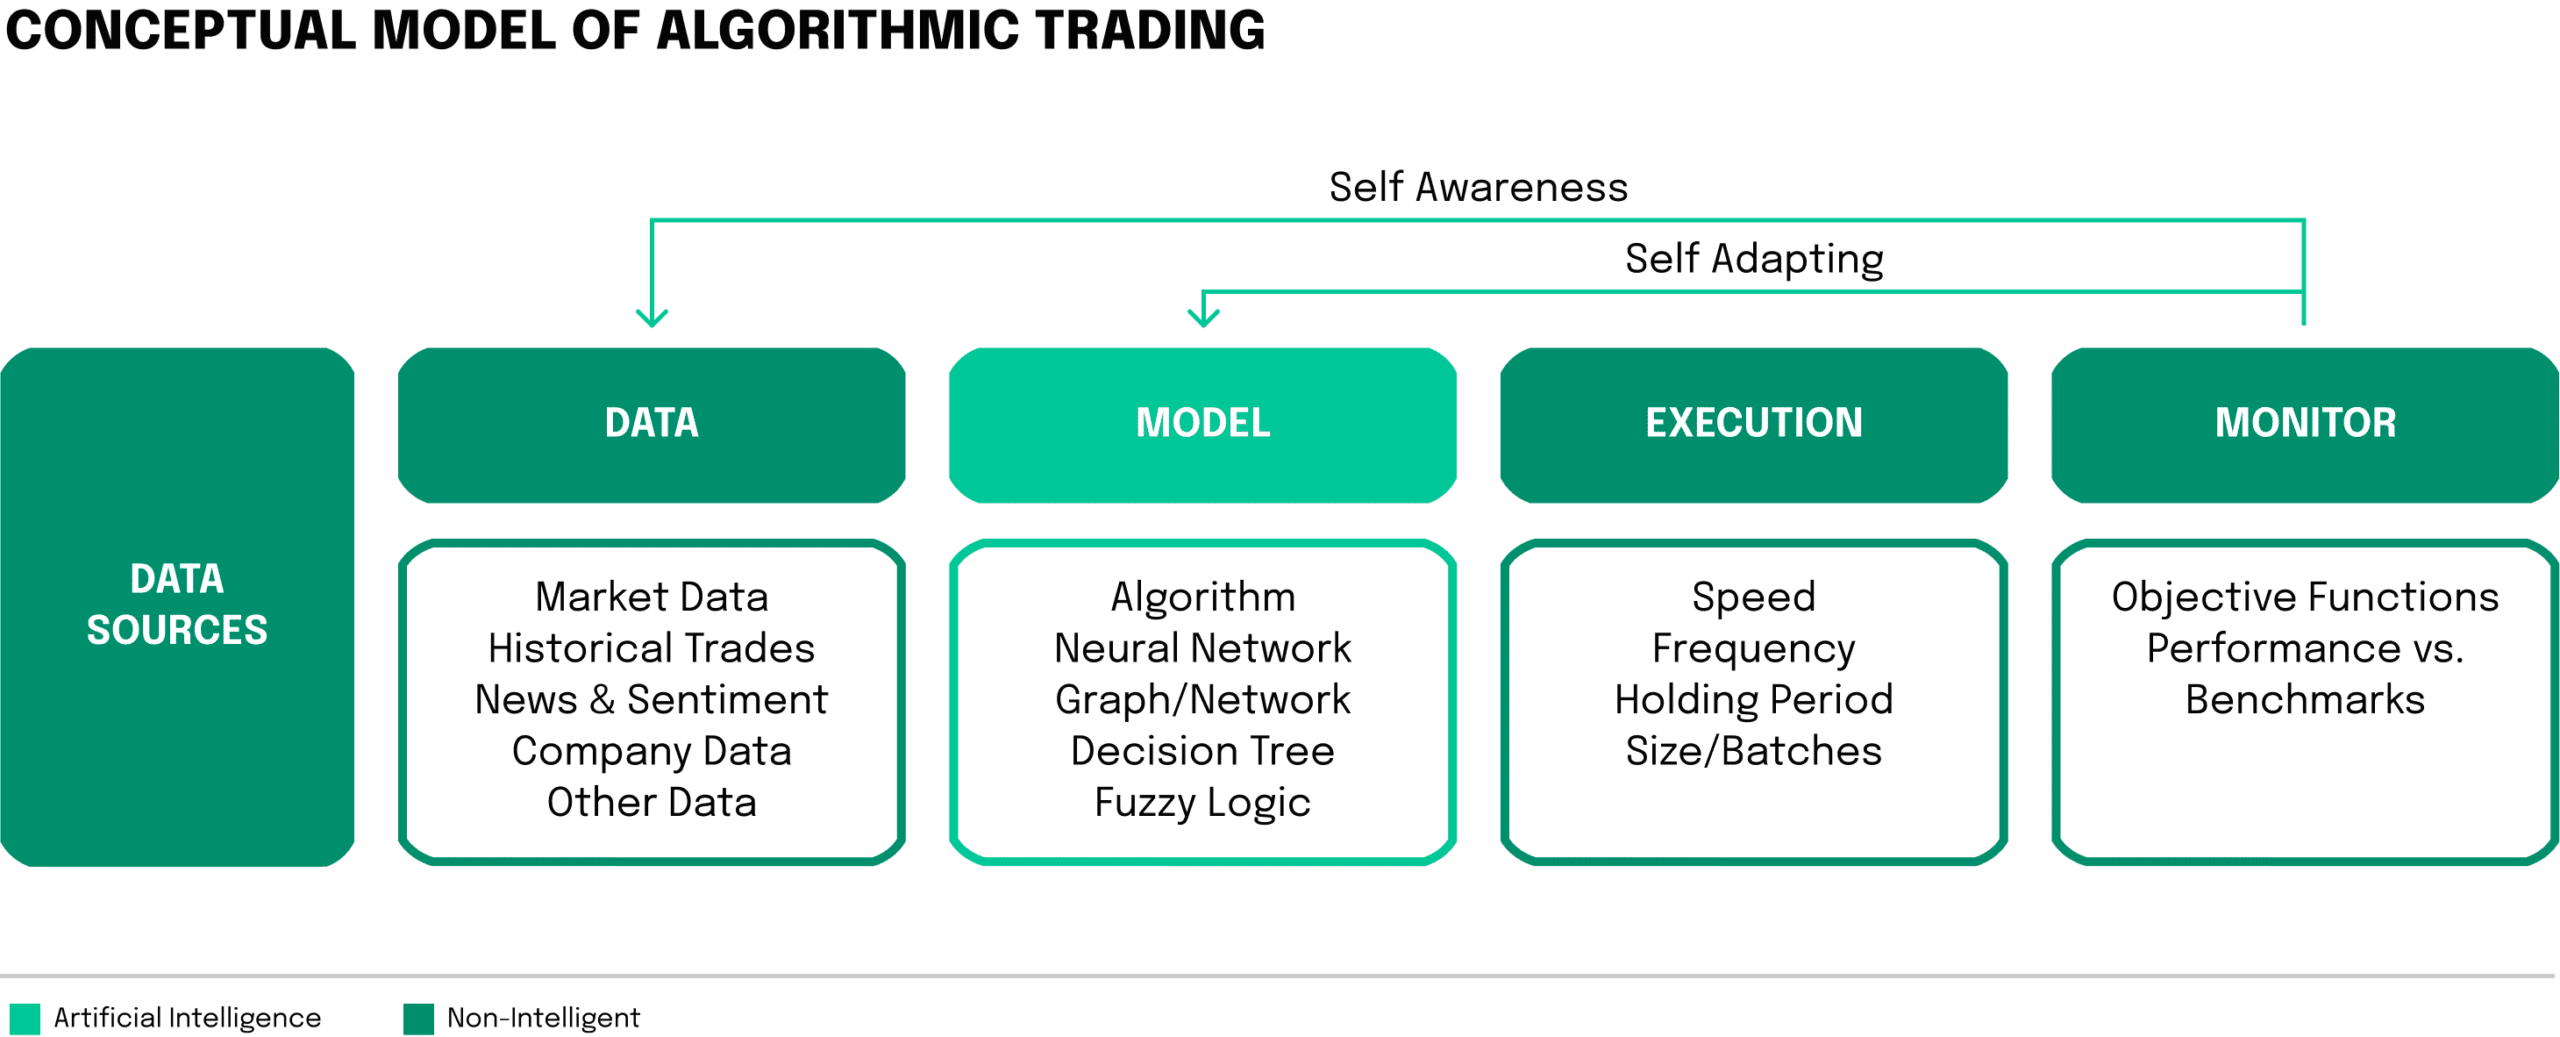 Conceptual Model of Algorithmic Trading